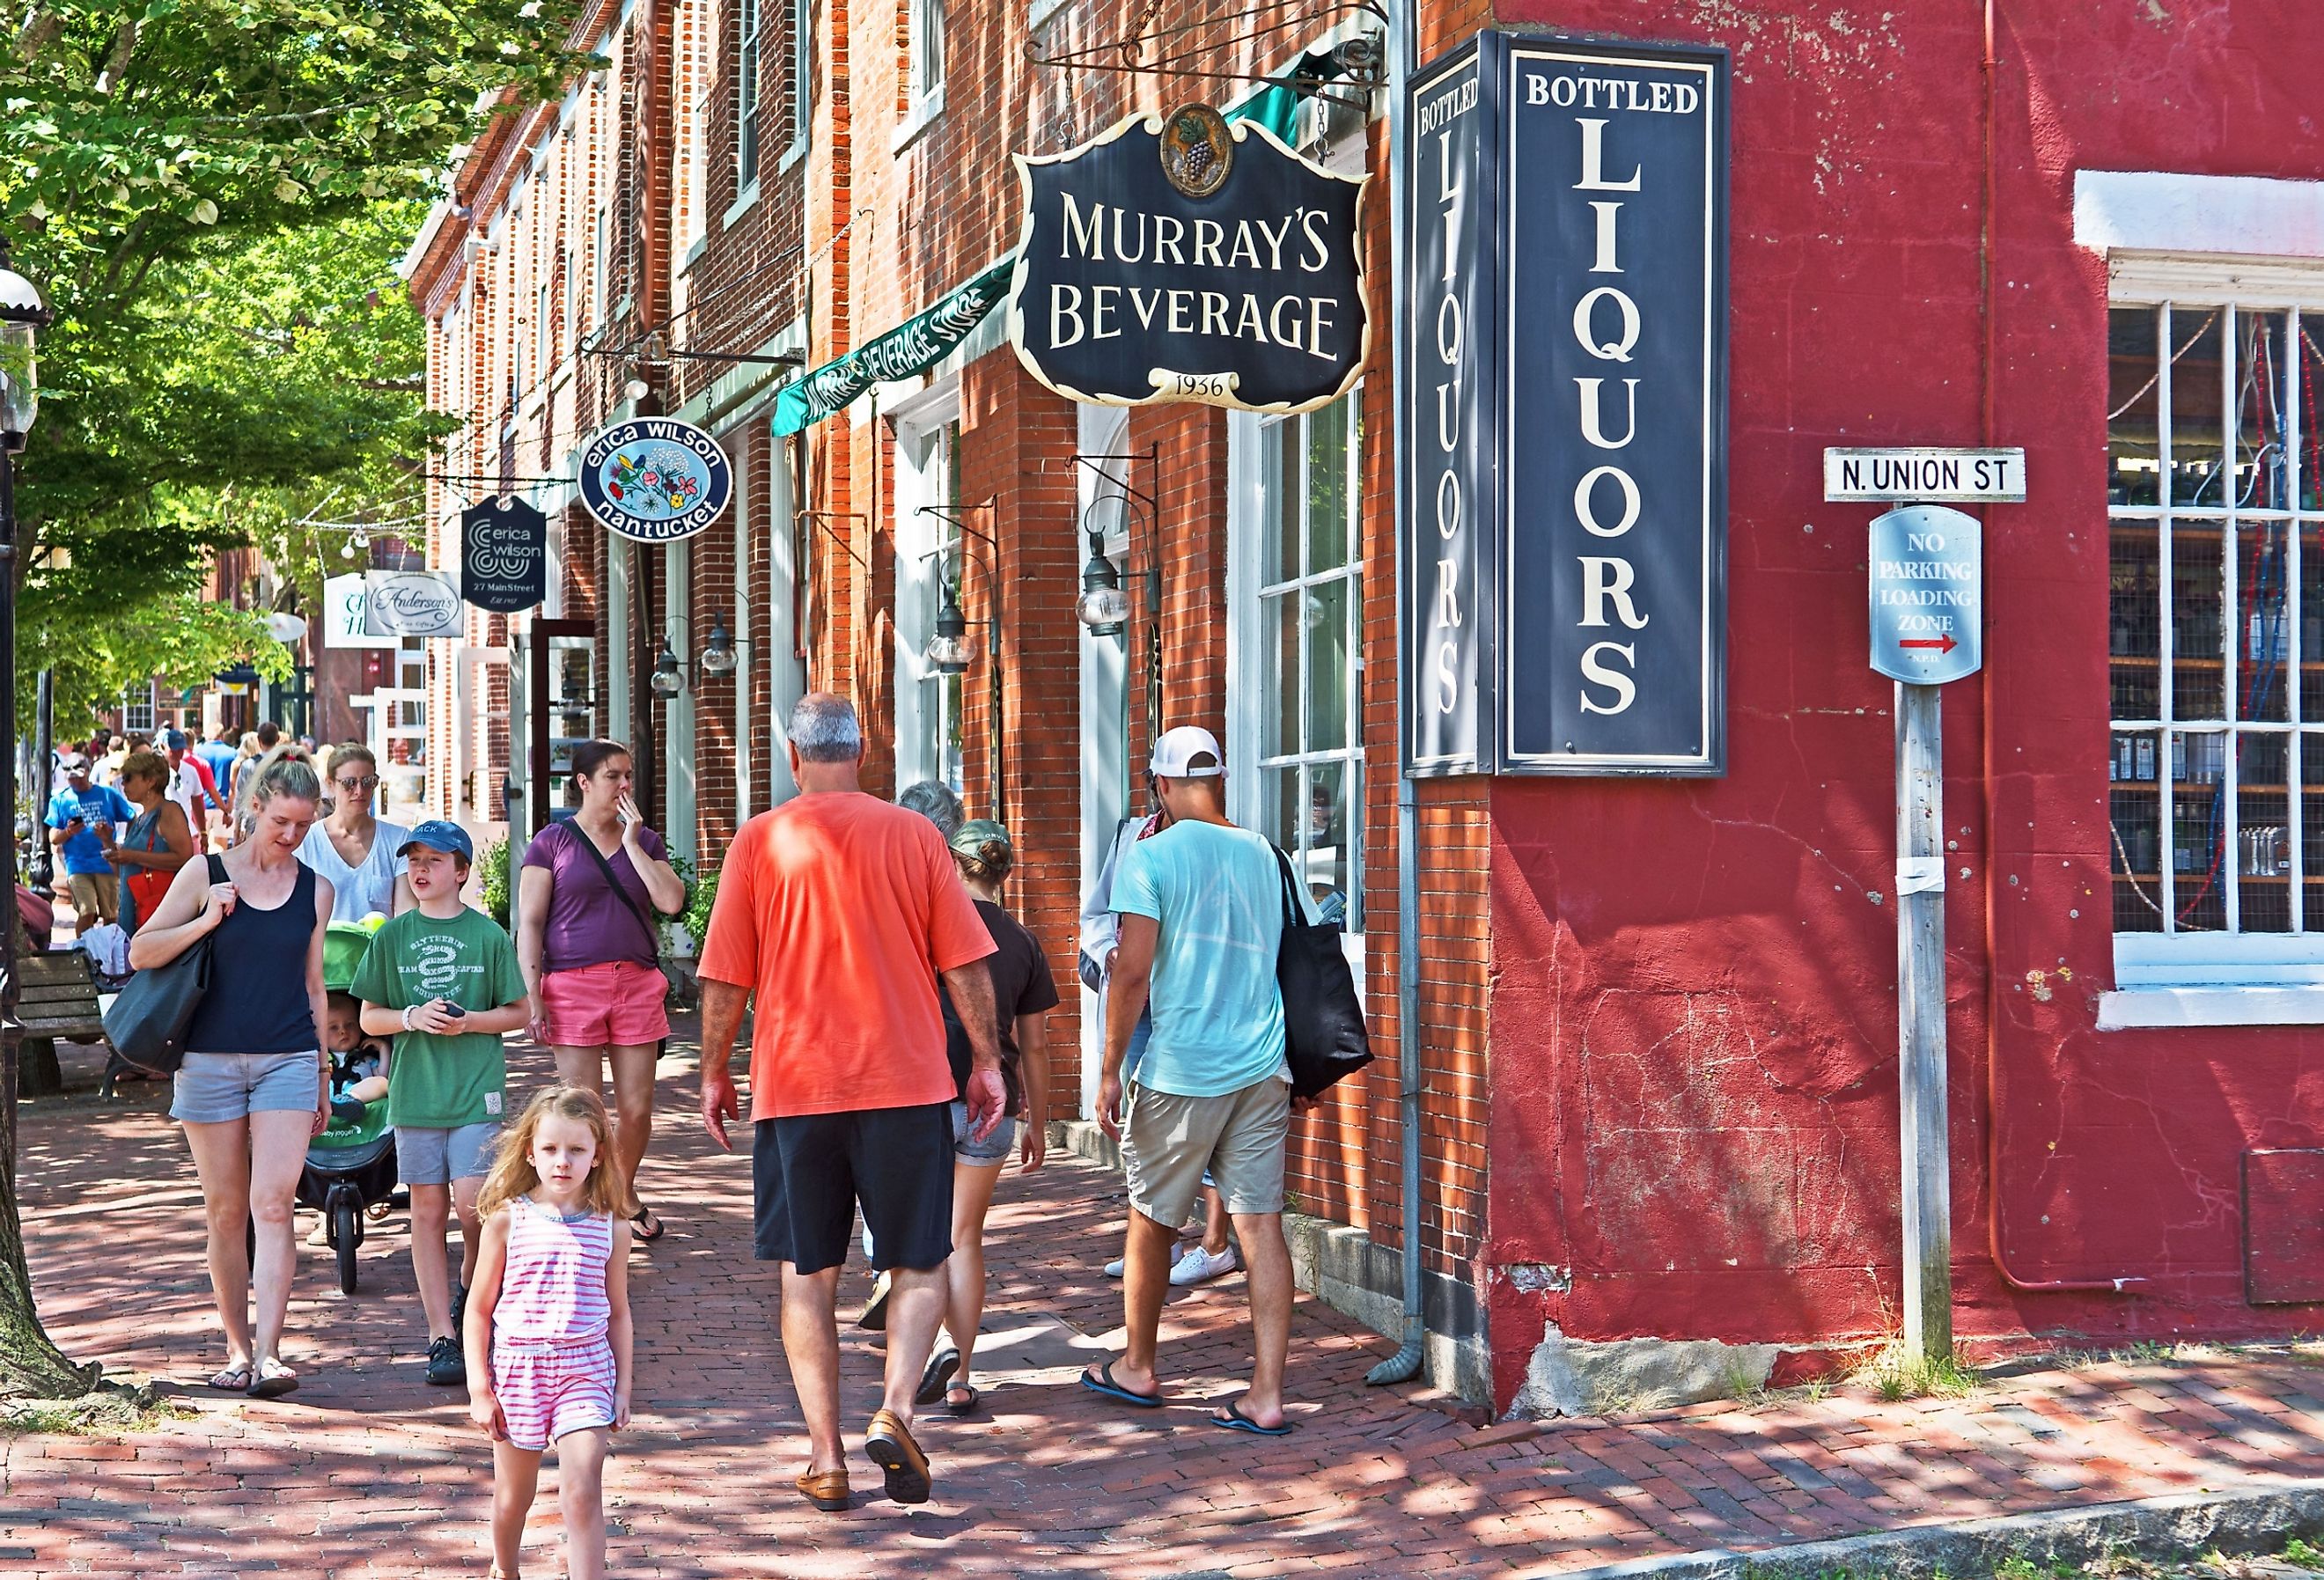 Downtown street in Nantucket, Massachusetts. Image credit Mystic Stock Photography via Shutterstock